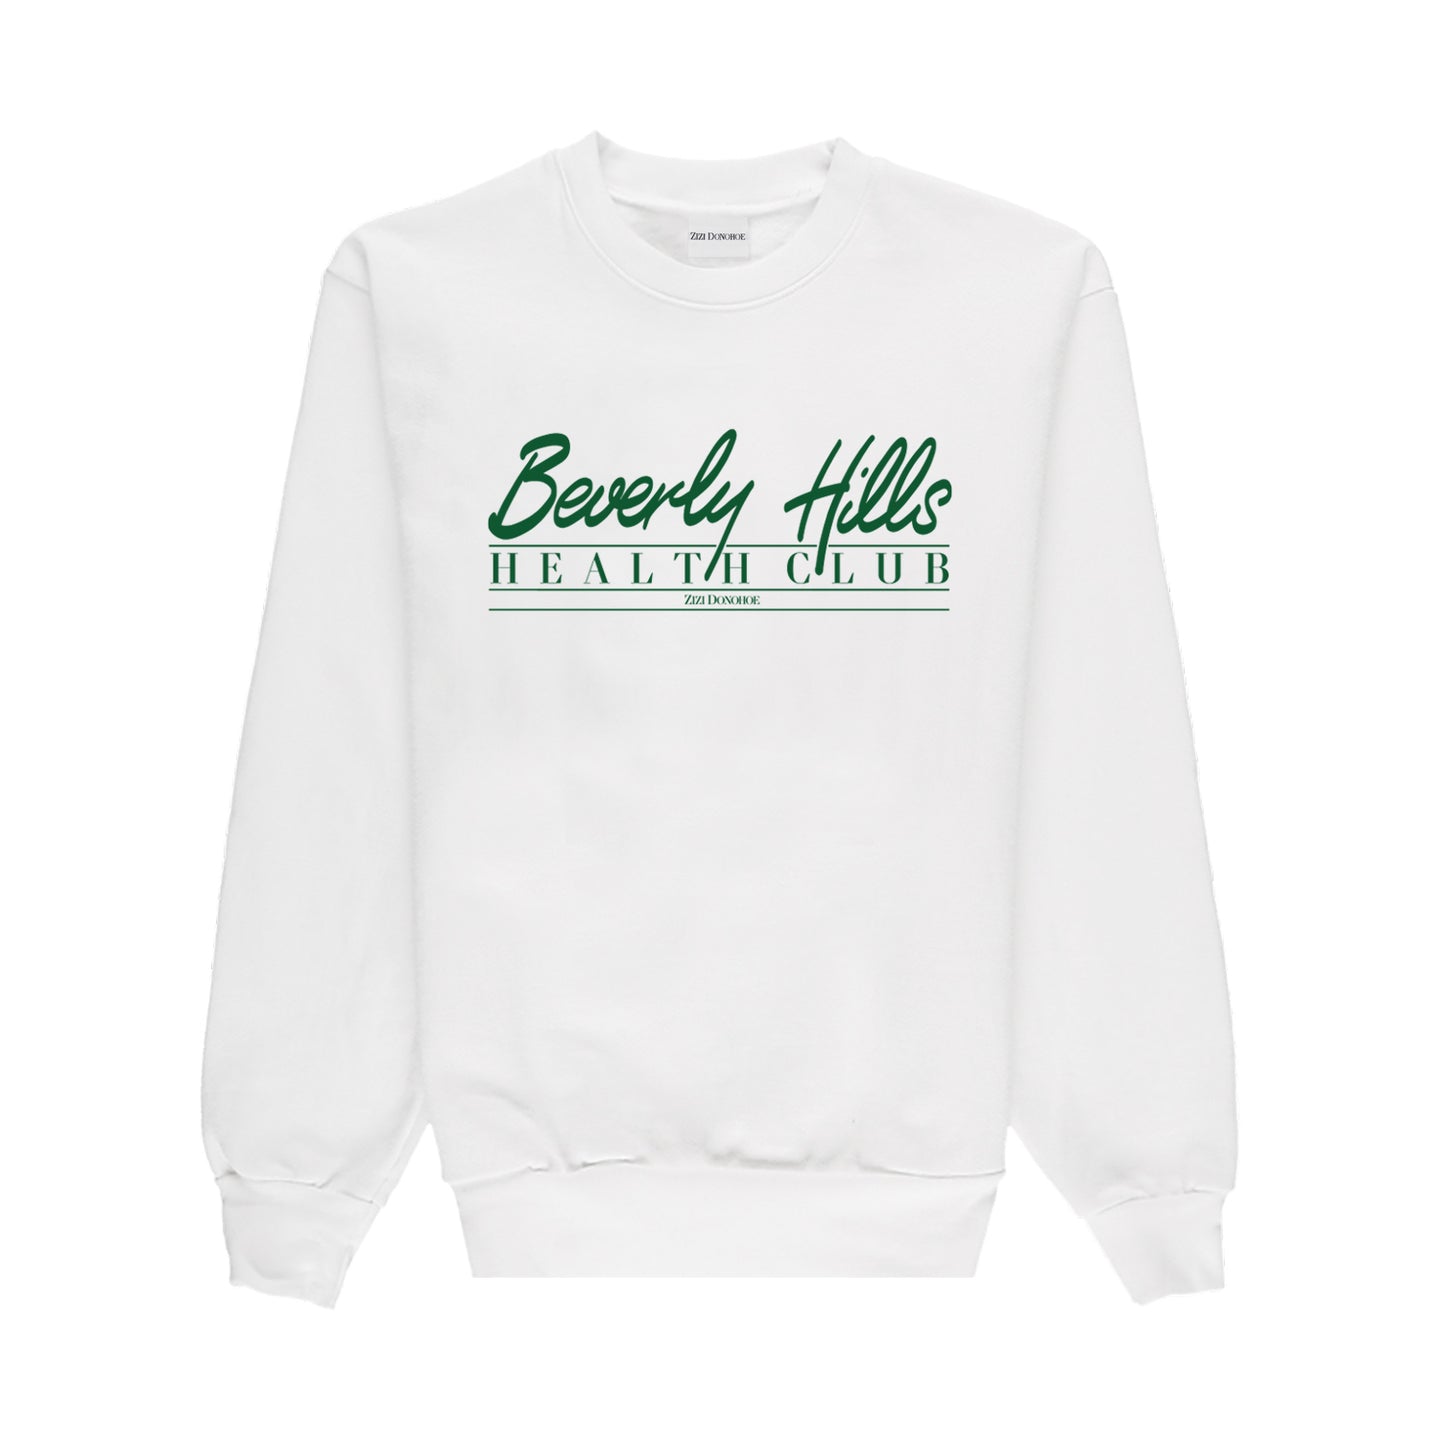 Beverly Hills Health Club Sweatshirt